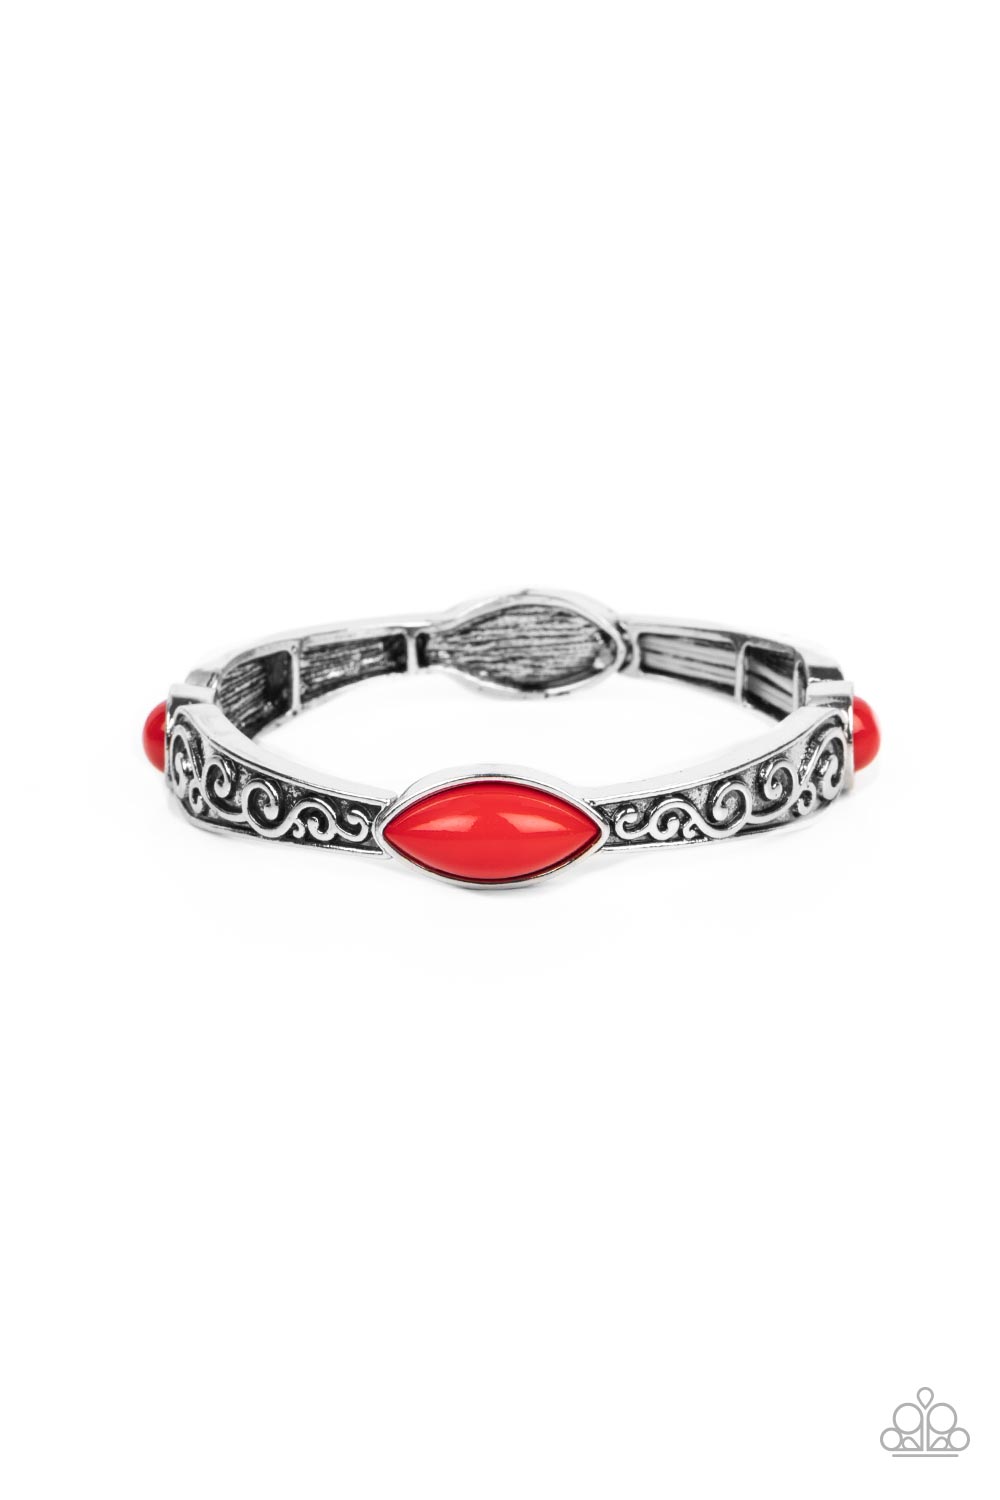 Veranda Variety Paparazzi Accessories Bracelet - Red